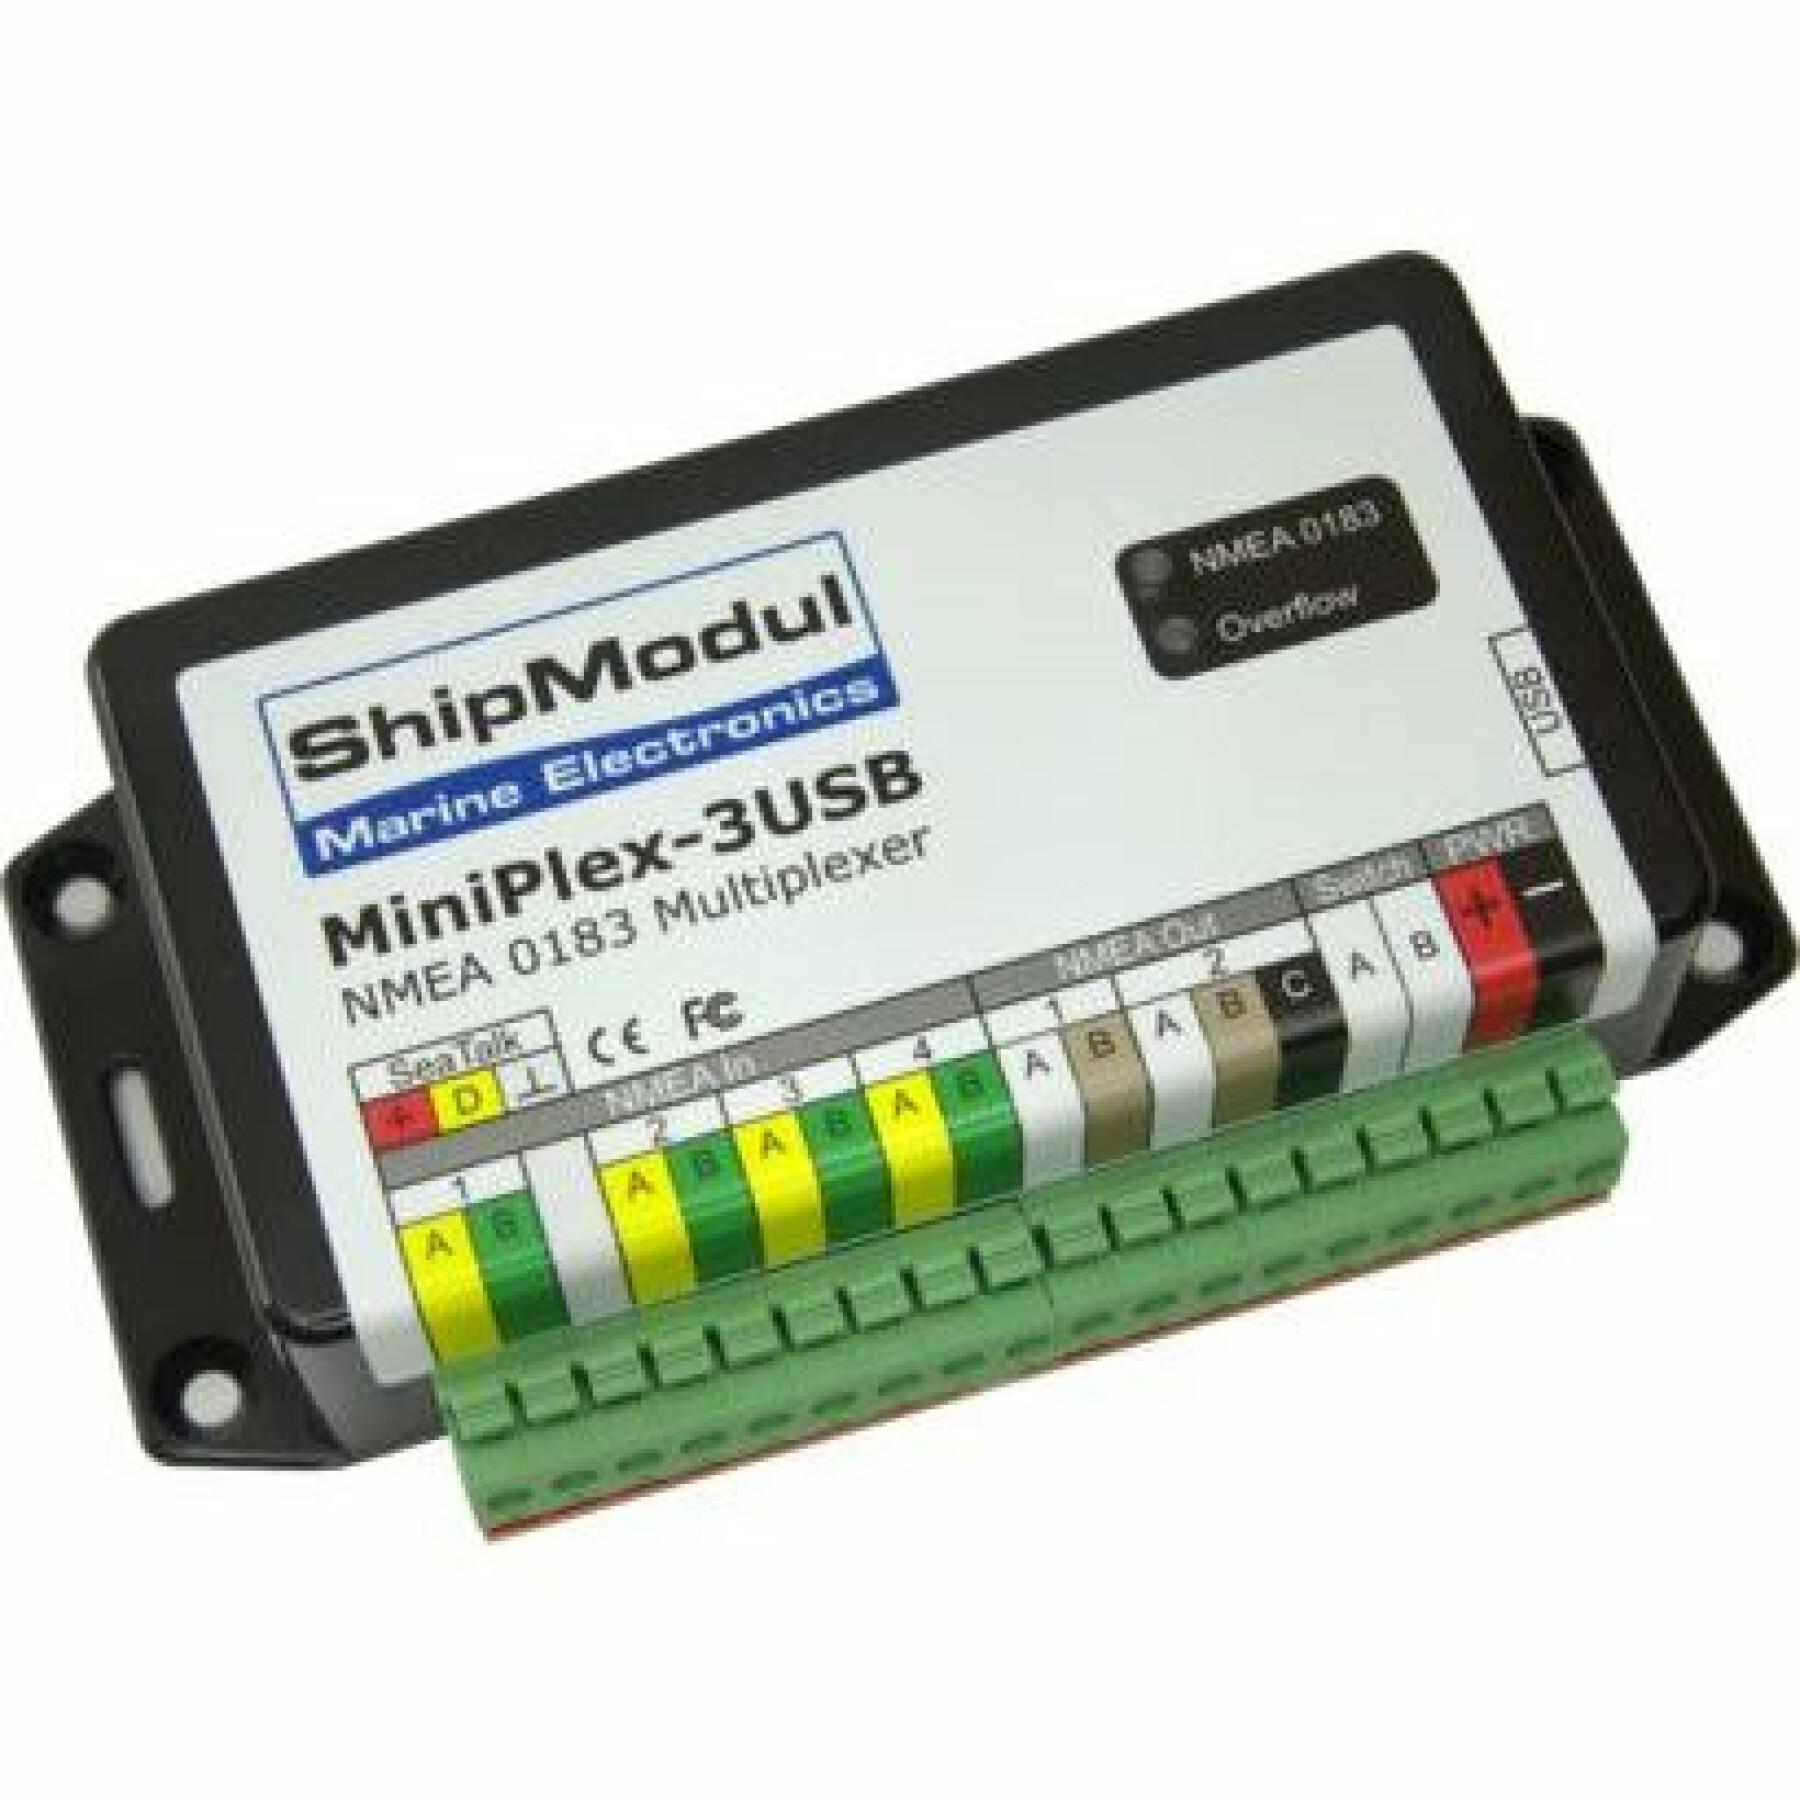 Multiplexer usb version ShipModul Miniplex-3USB